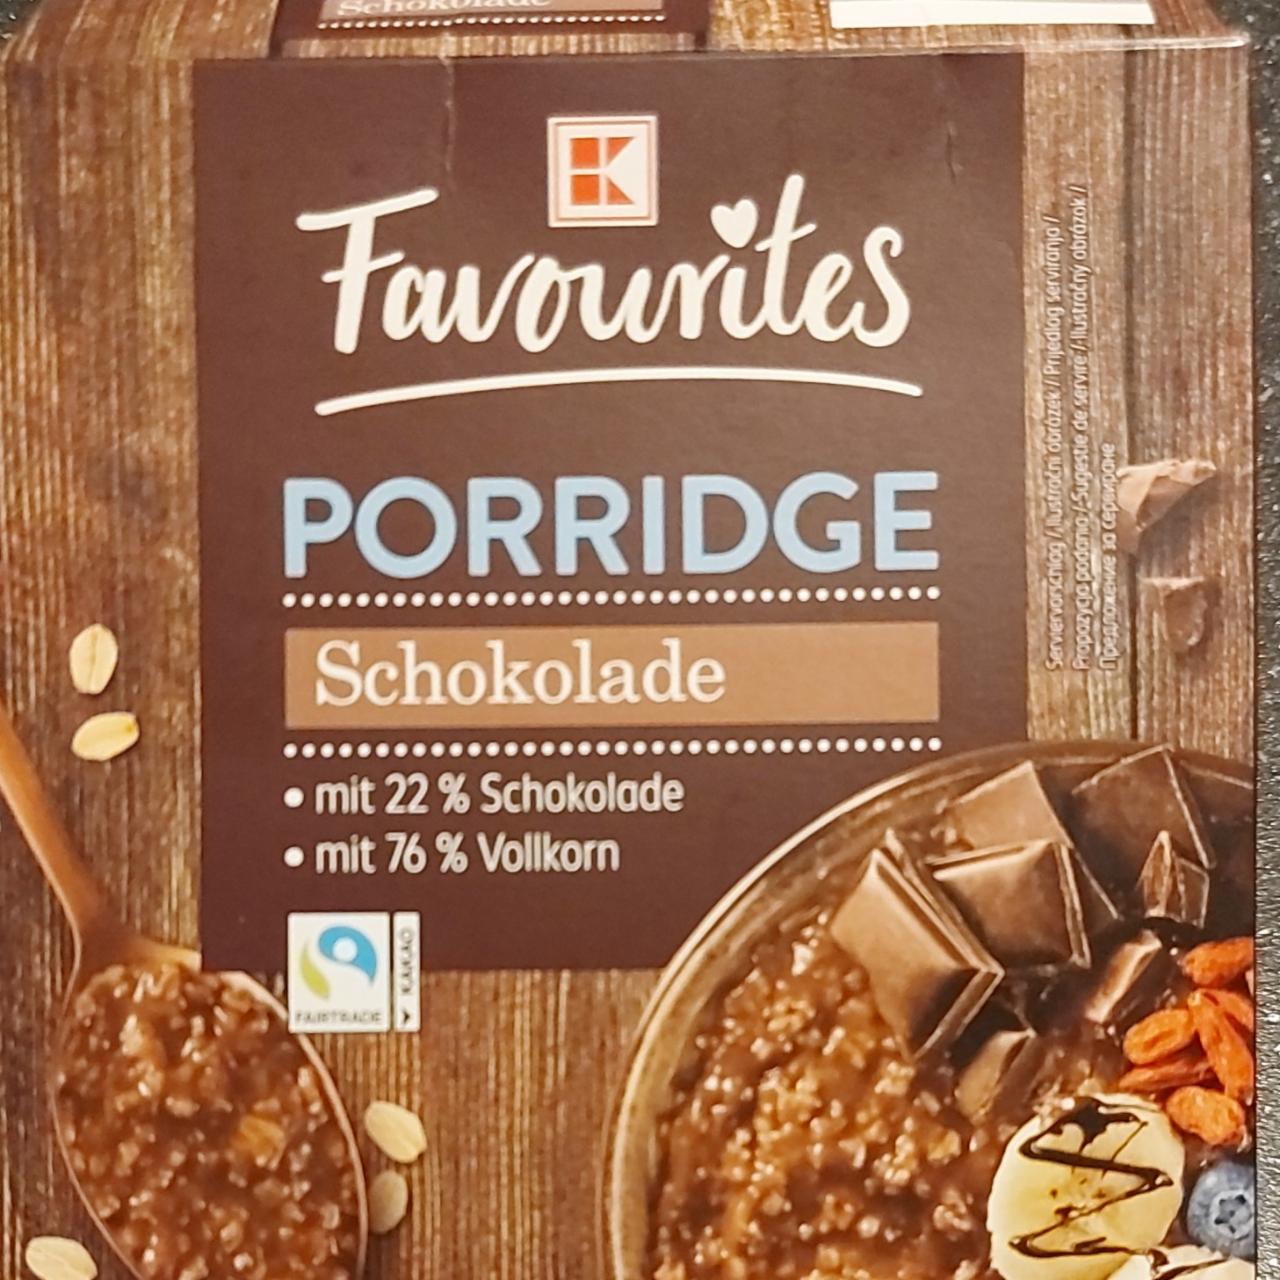 Zdjęcia - Porridge Schokolade Kaufland